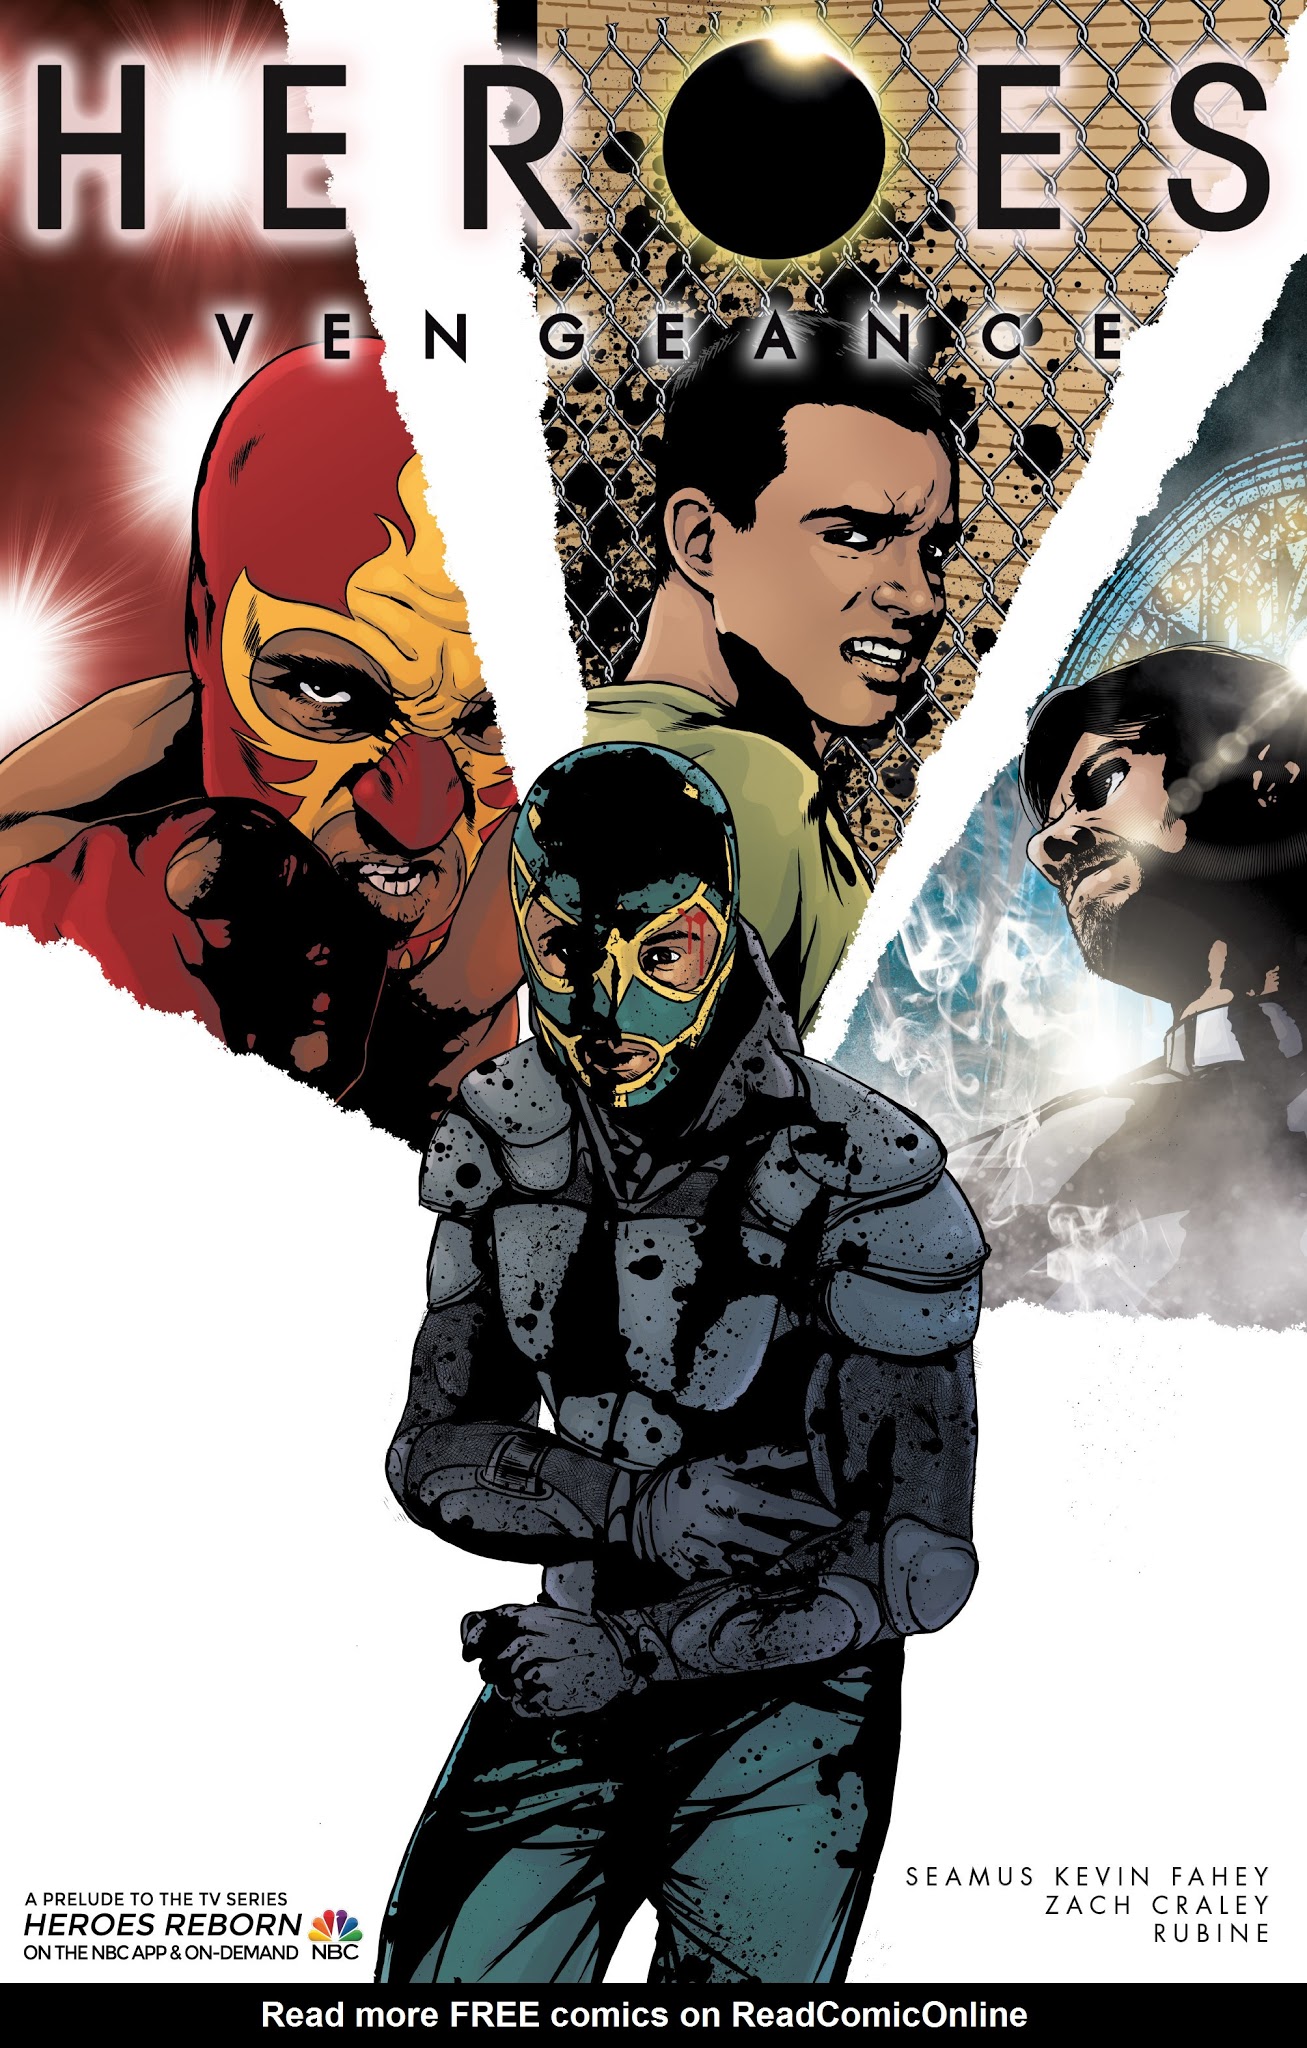 Read online Heroes: Vengeance comic -  Issue #4 - 1